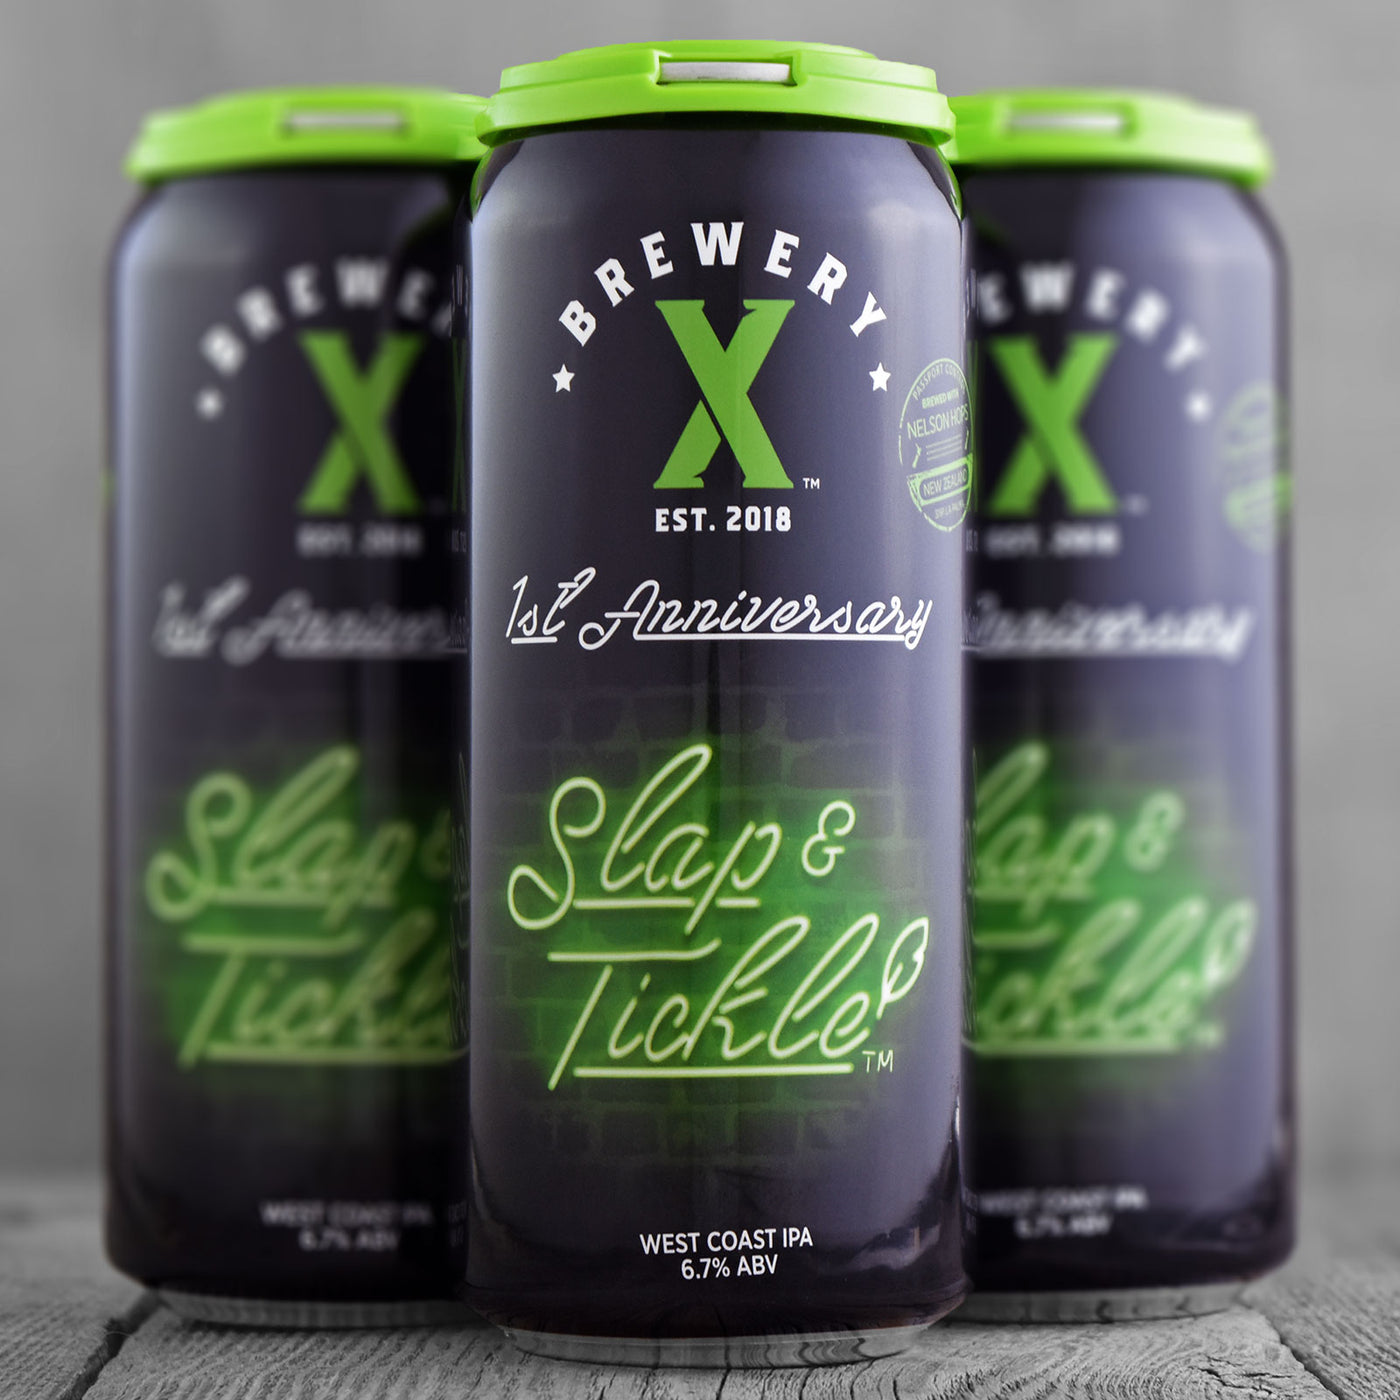 Brewery X Slap & Tickle 1st Anniversary